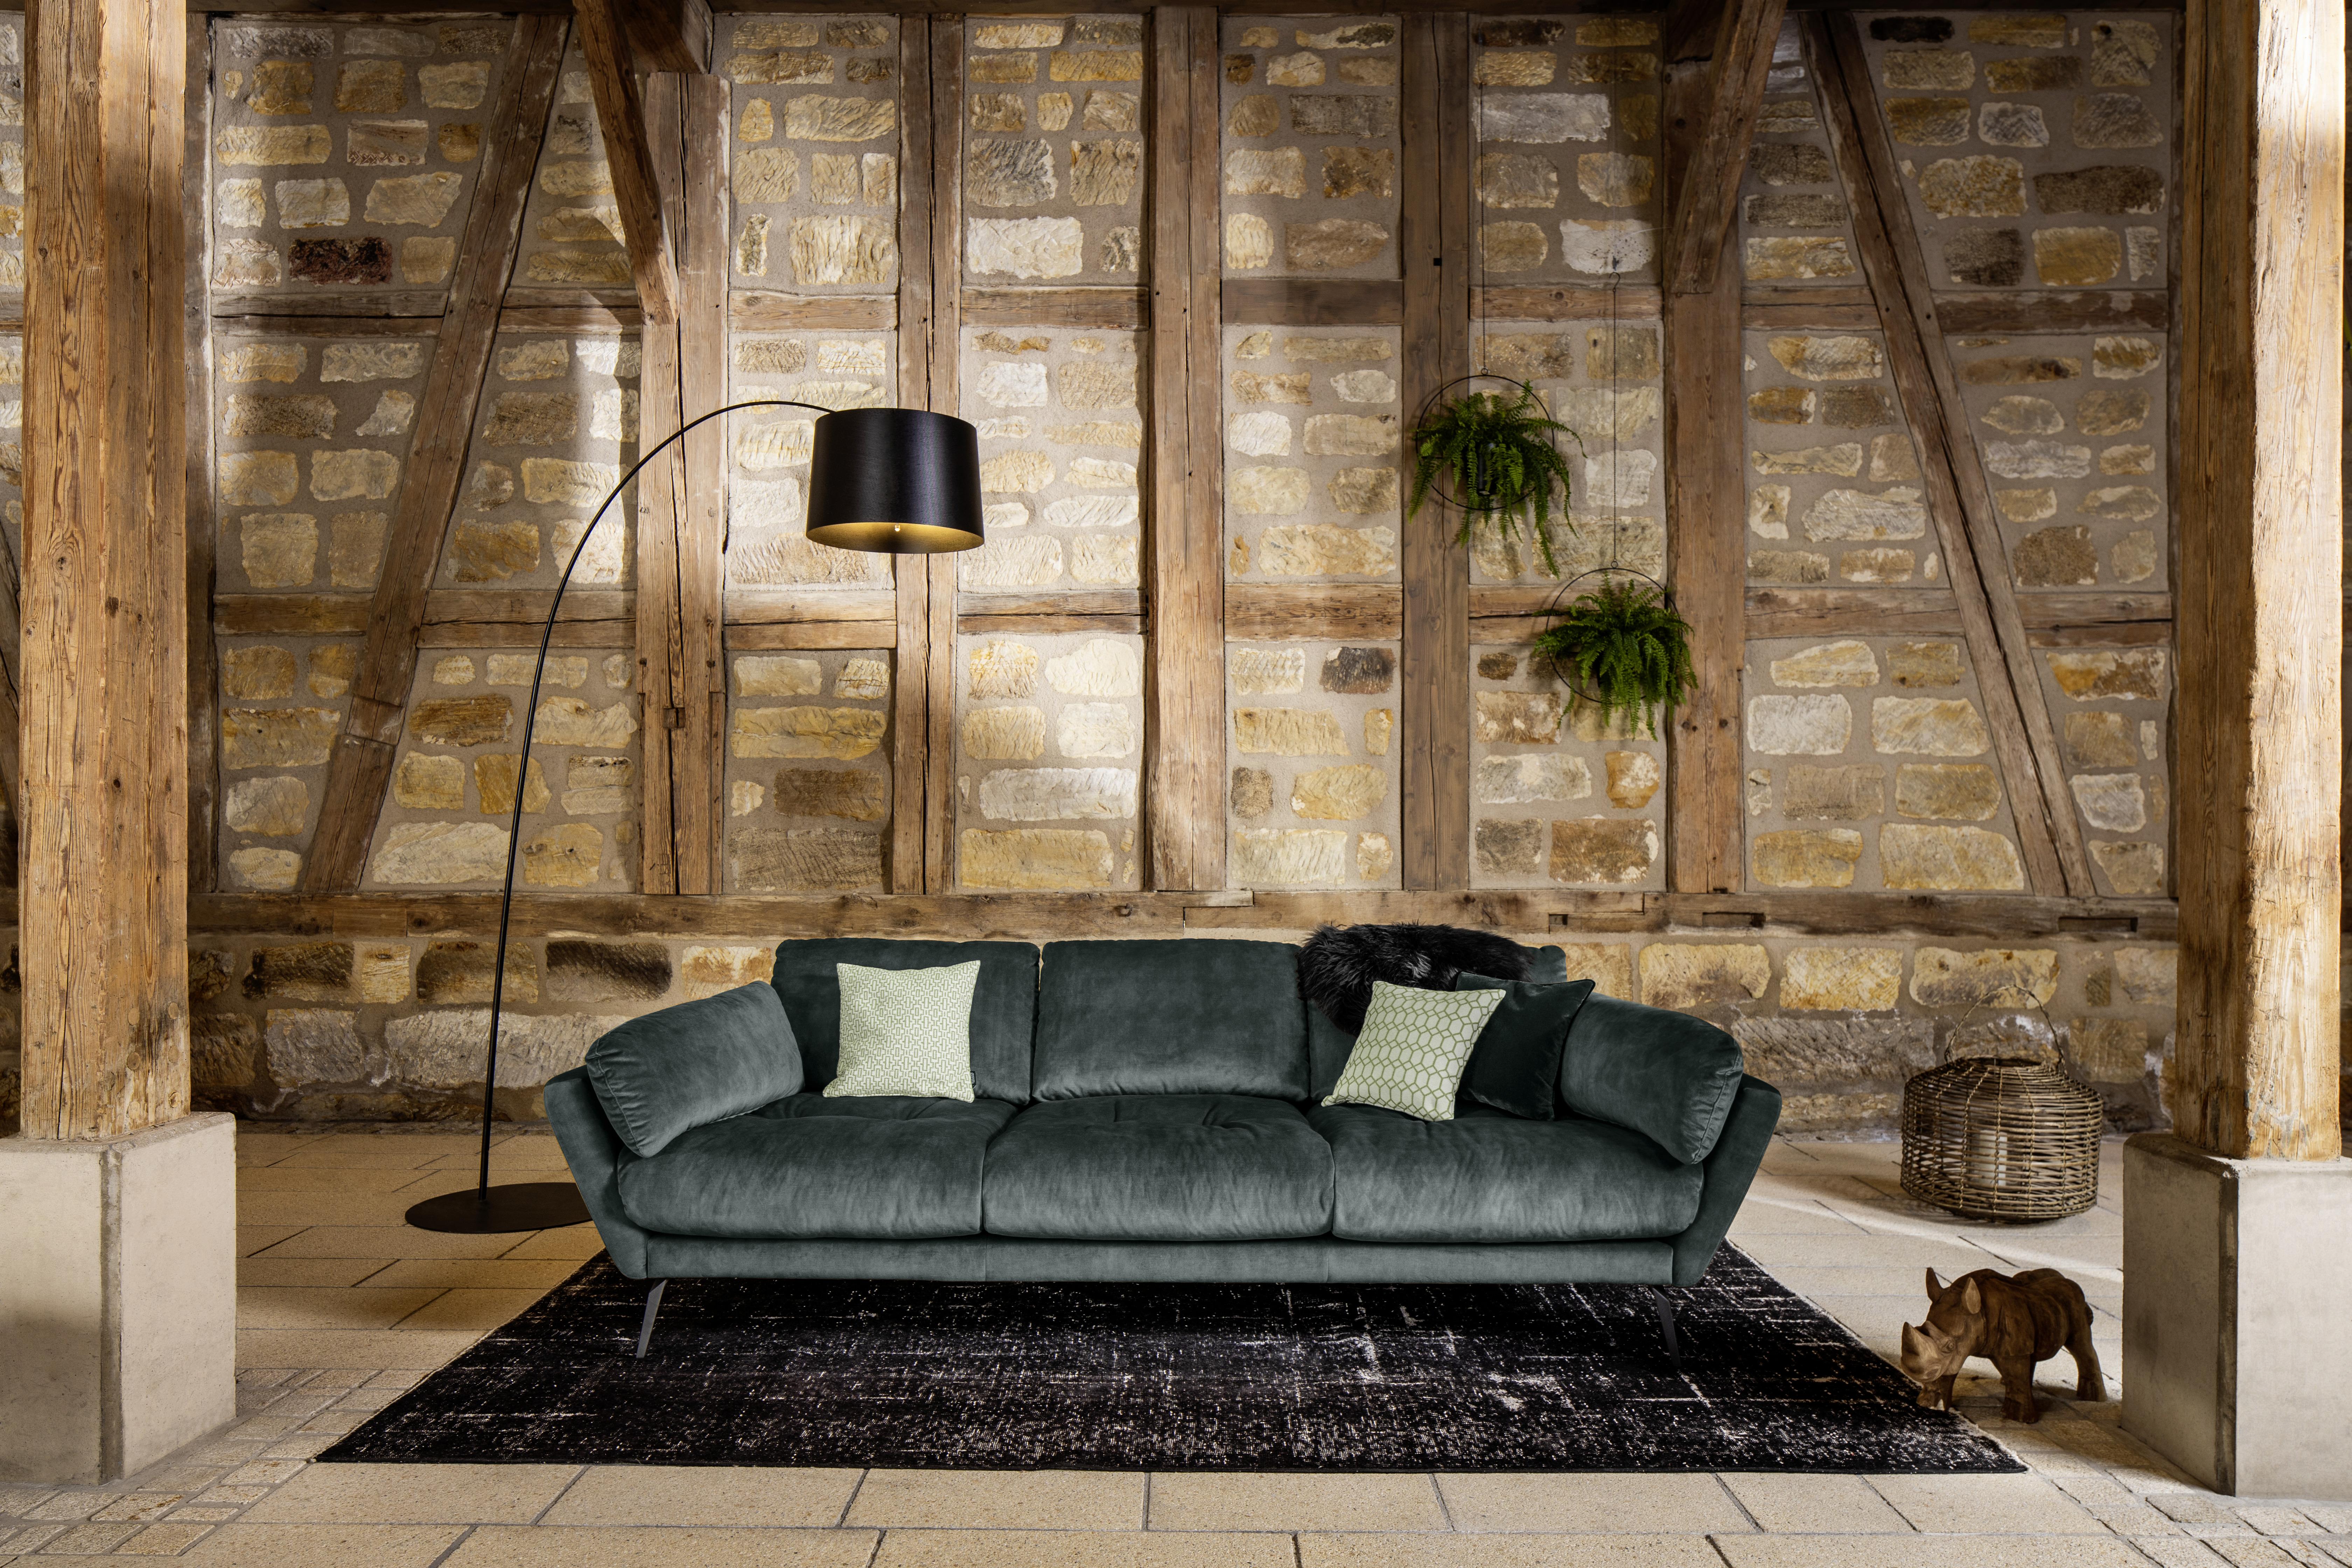 Big Sofa Softy mit Kissen B: 254 cm Blau Velours - Blau/Schwarz, MODERN, Textil (254/79/113cm) - W.Schillig